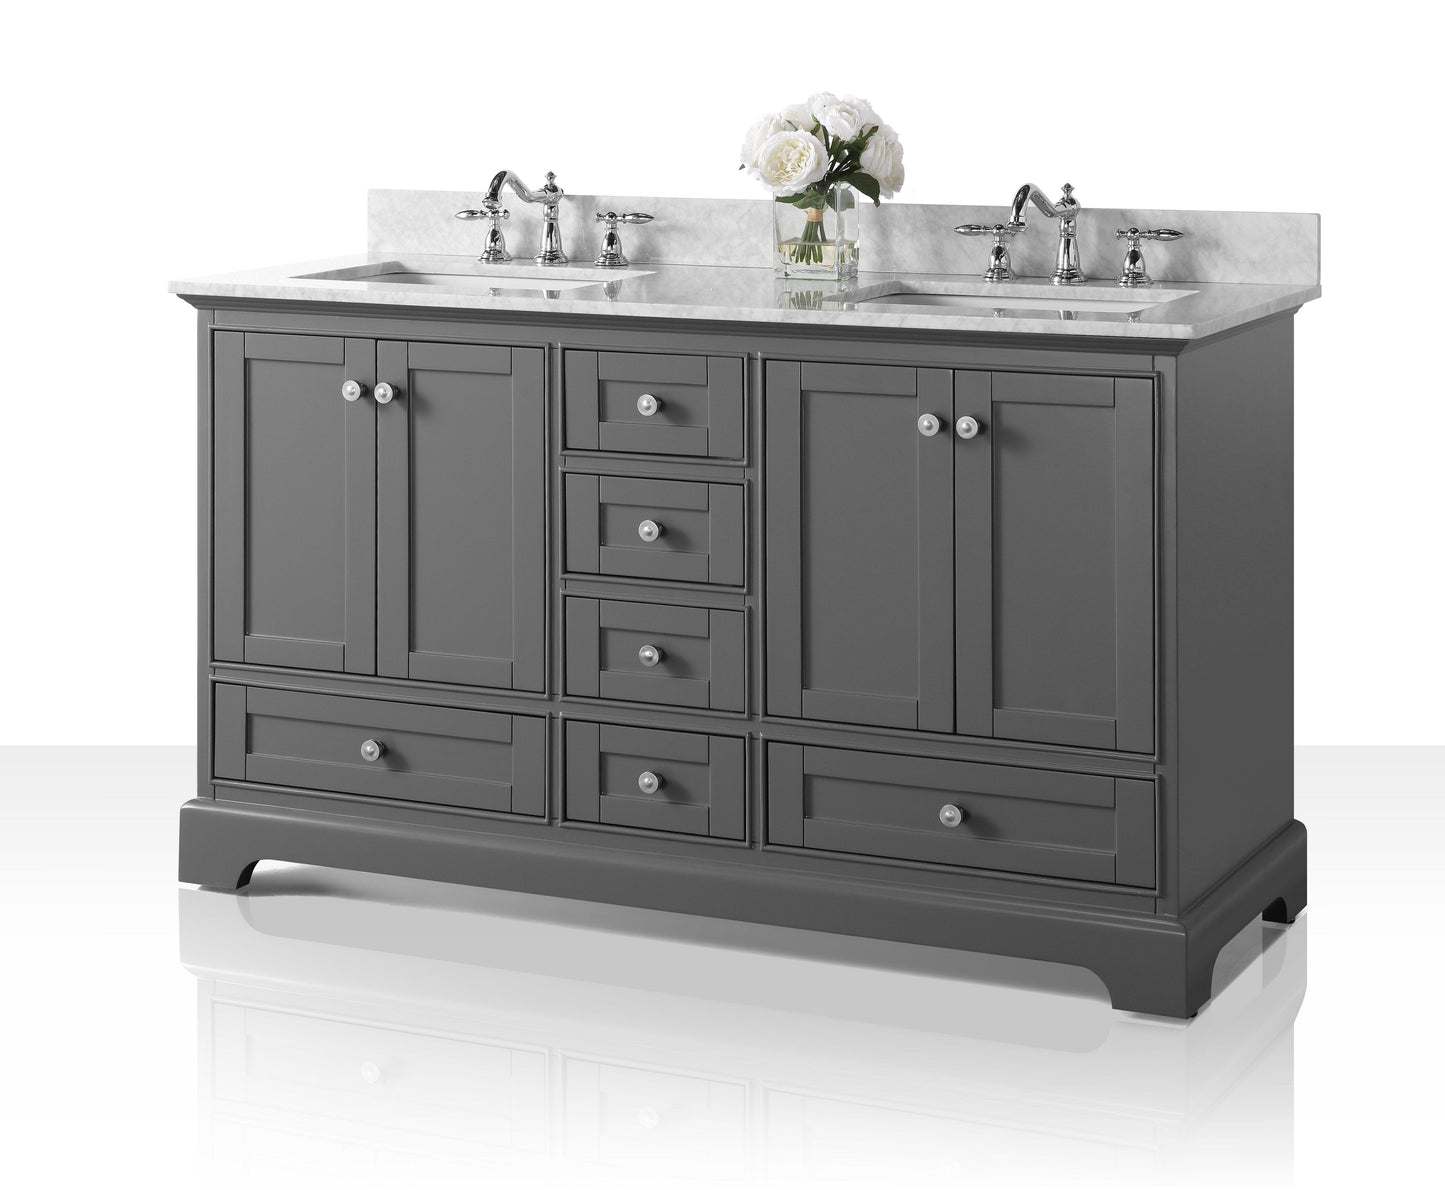 Ancerra Designs Audrey 60 in. Bath Vanity Set in Sapphire Gray